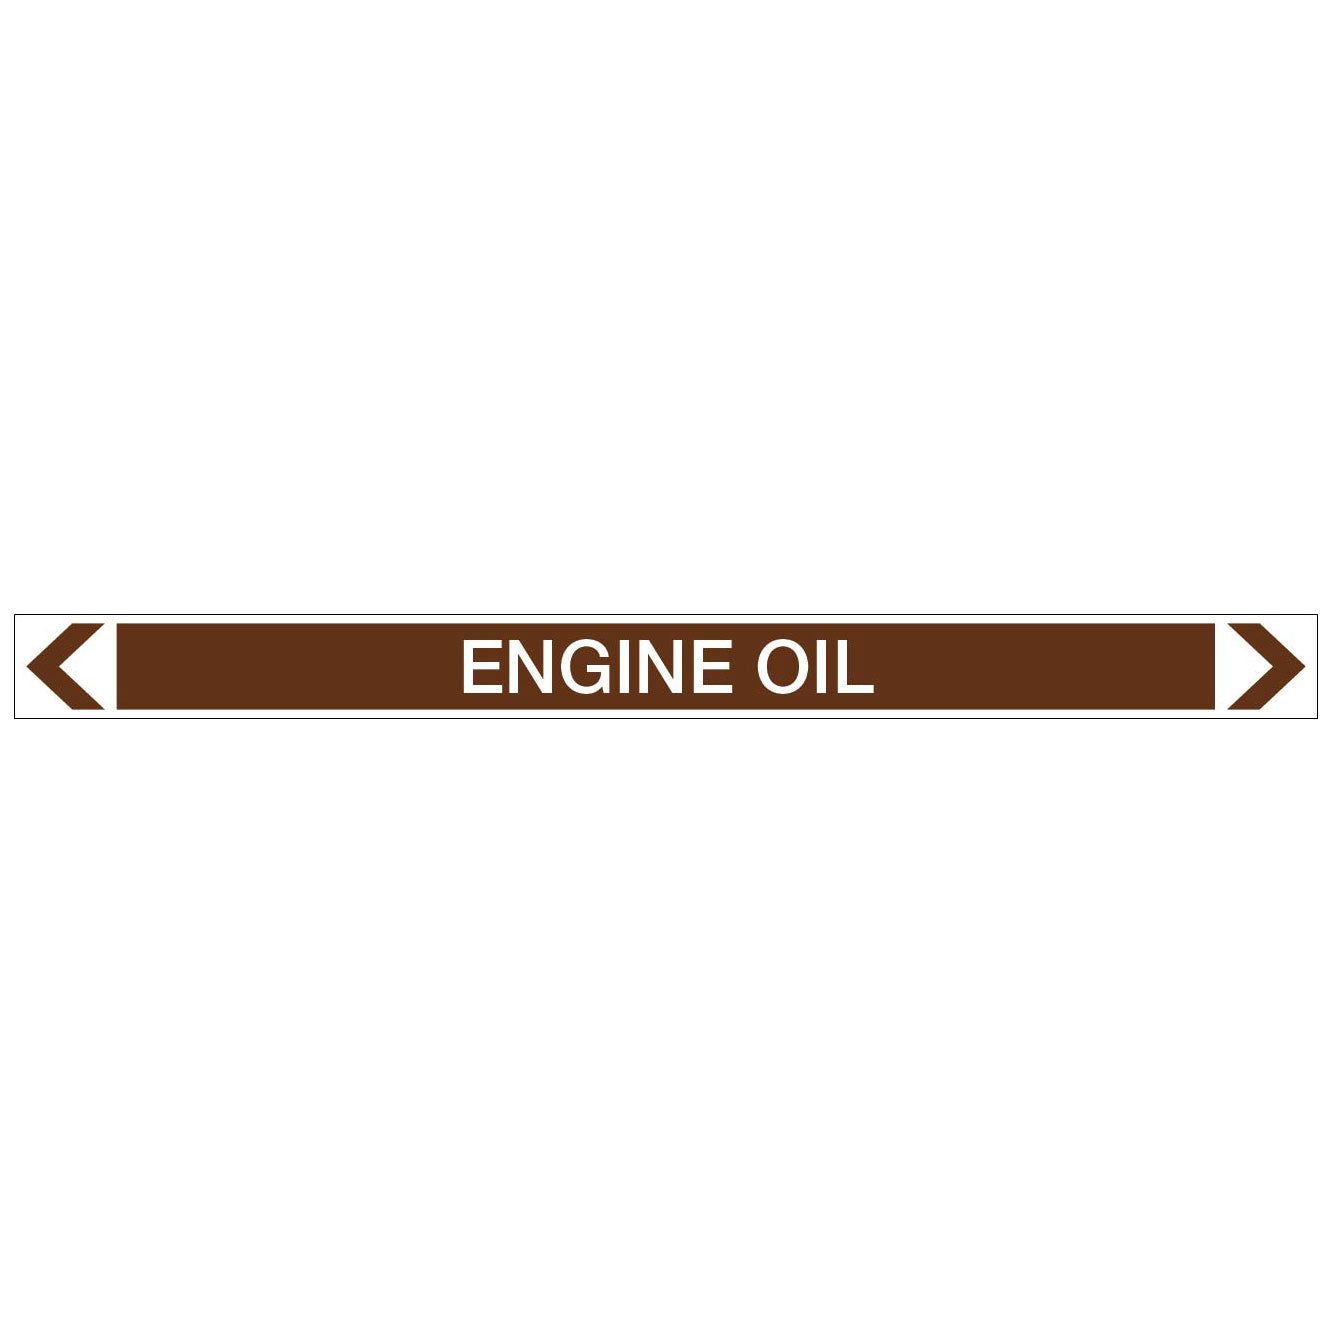 Oils - Engine Oil - Pipe Marker Sticker